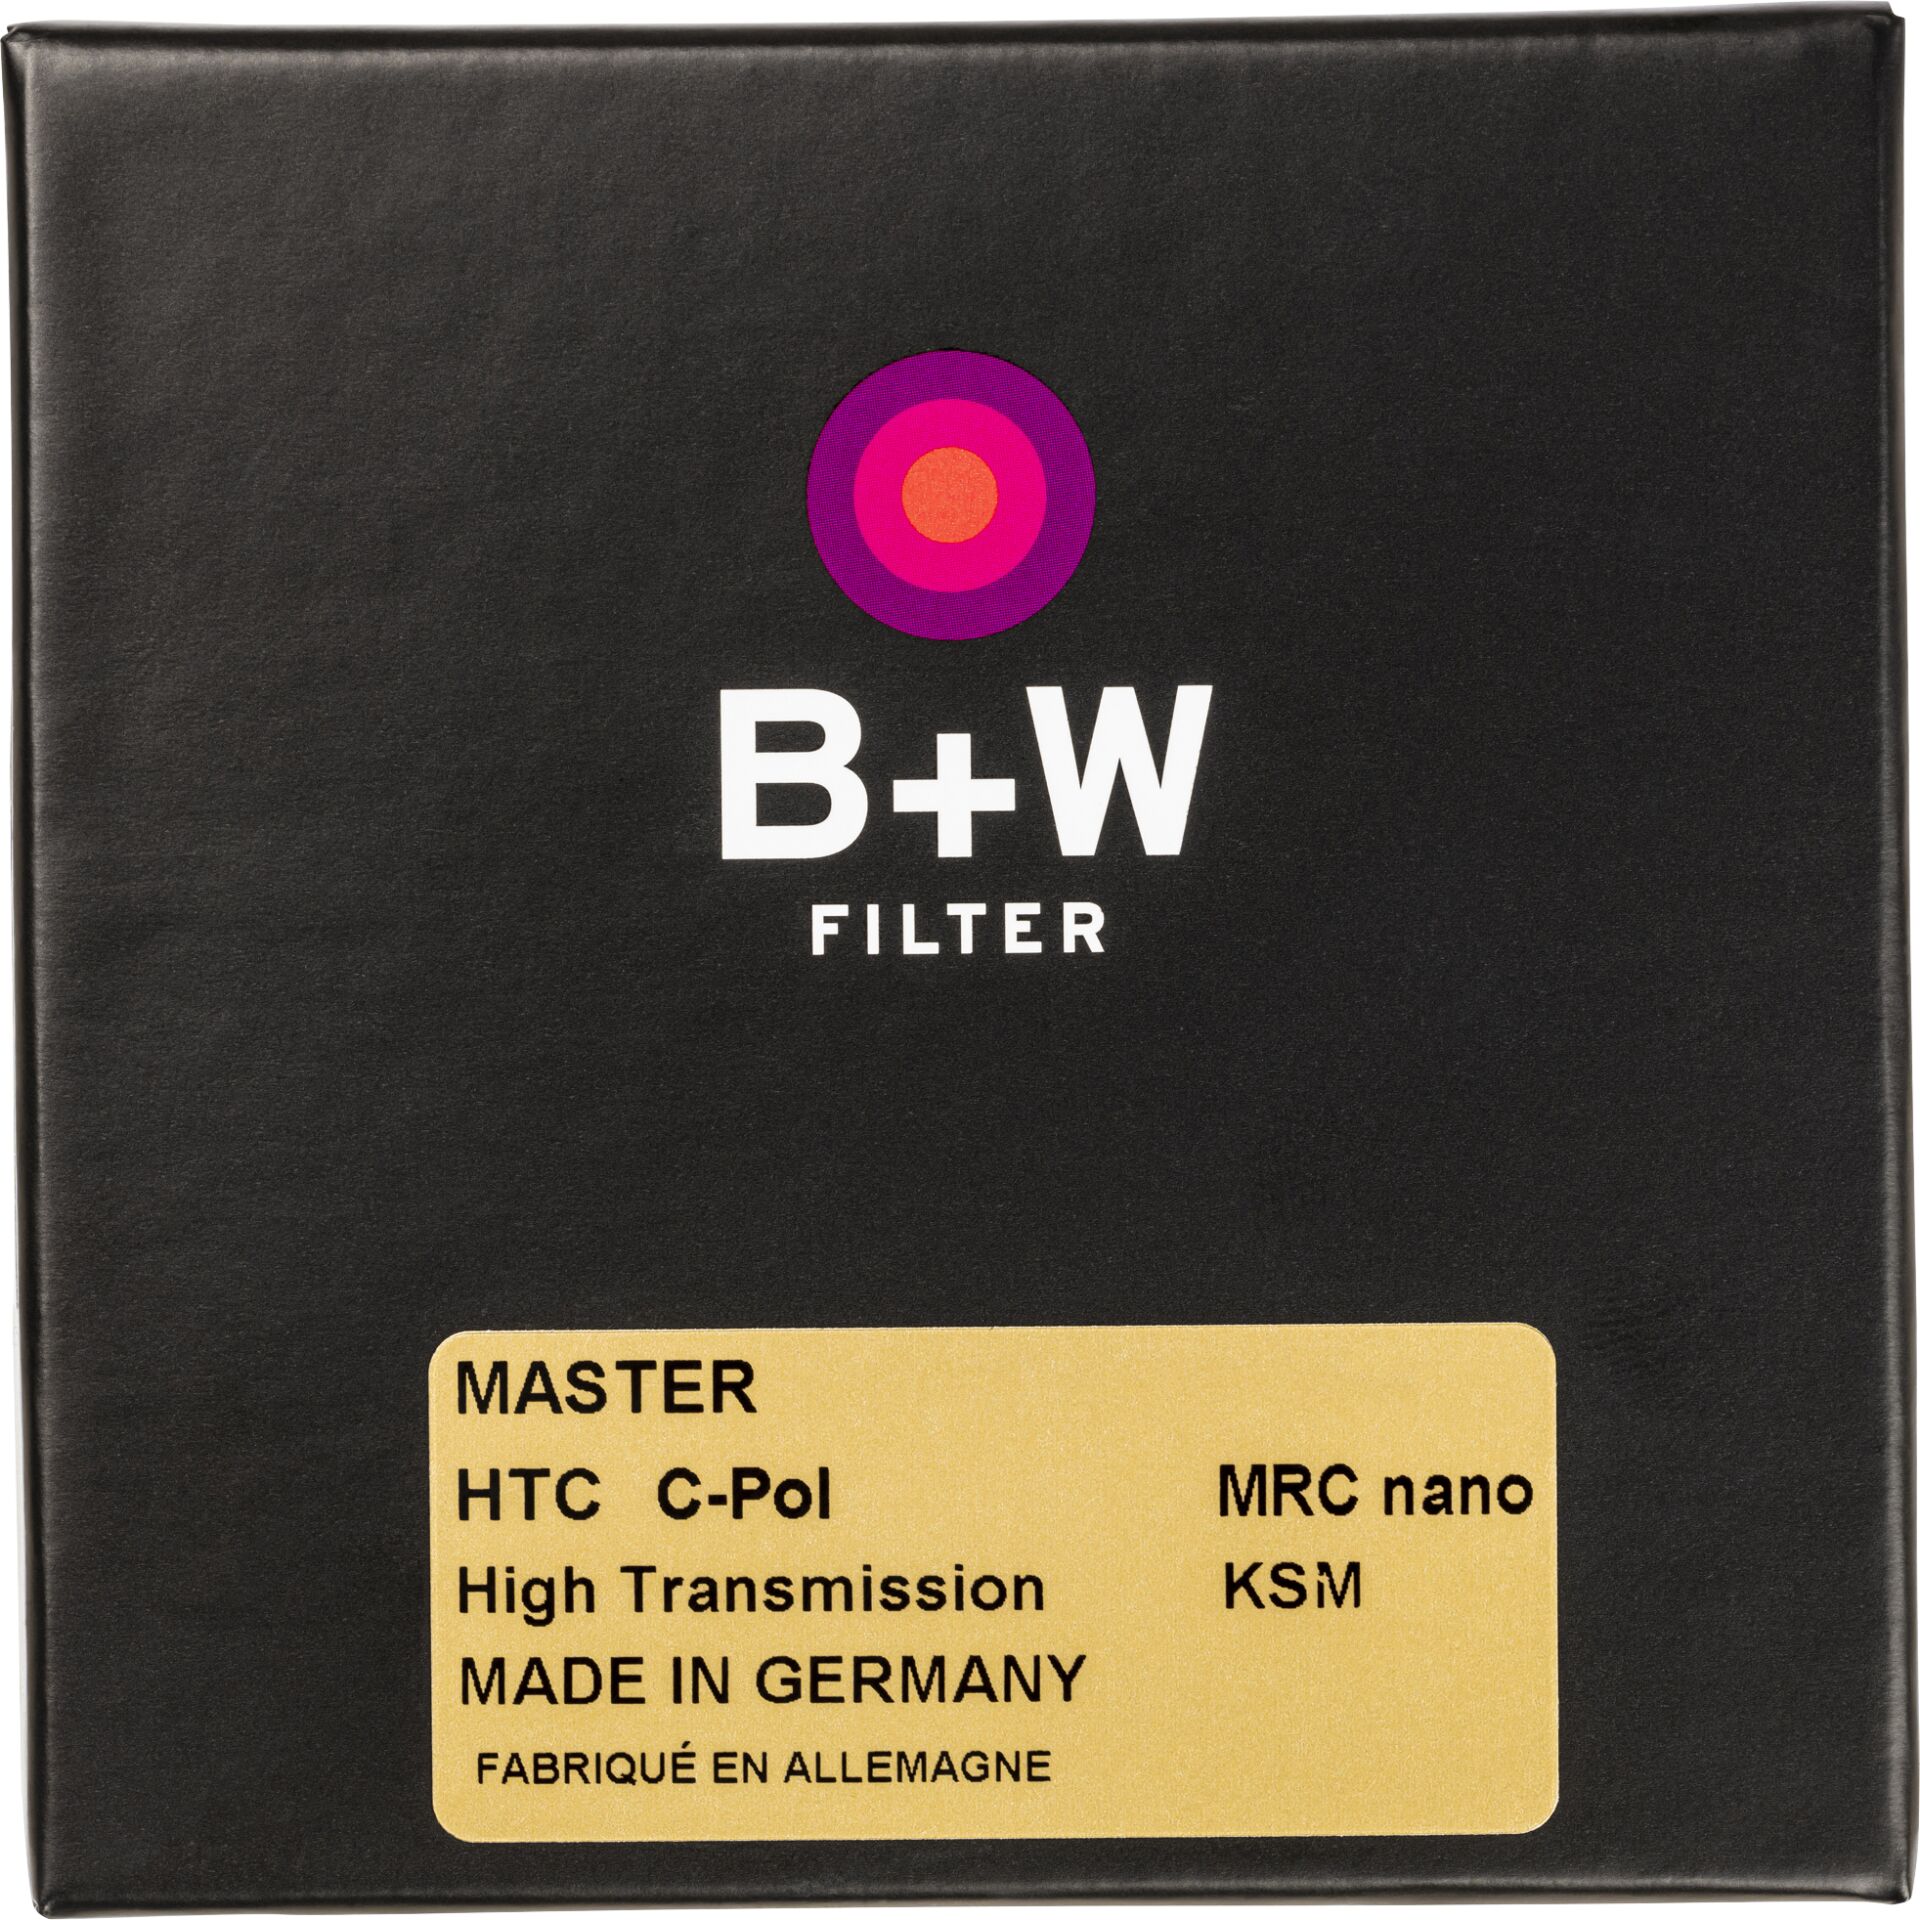 B+W POLFILTER HIGH TRANSMISSON ZIRKULAR MASTER 62mm